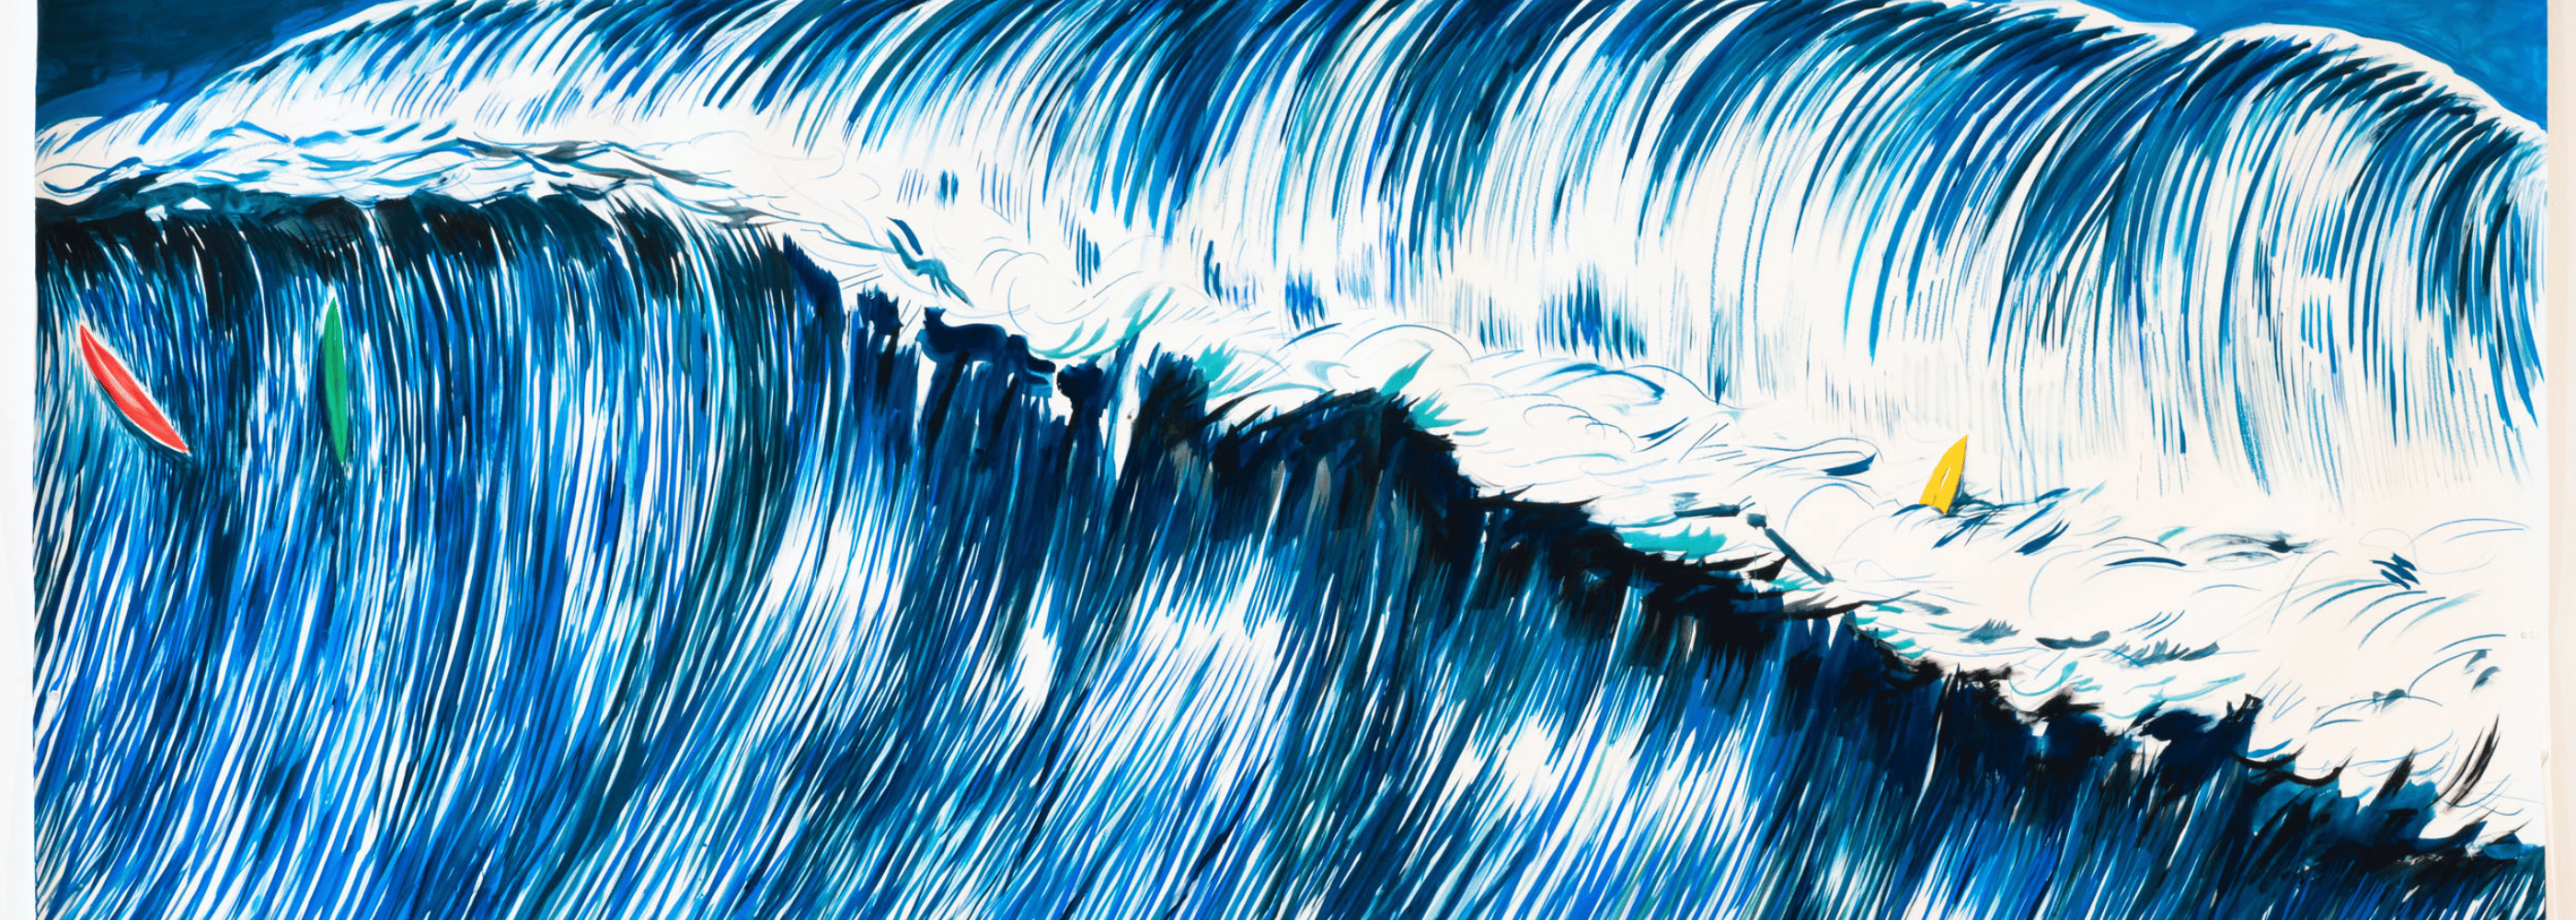 Blue wave ocean artwork